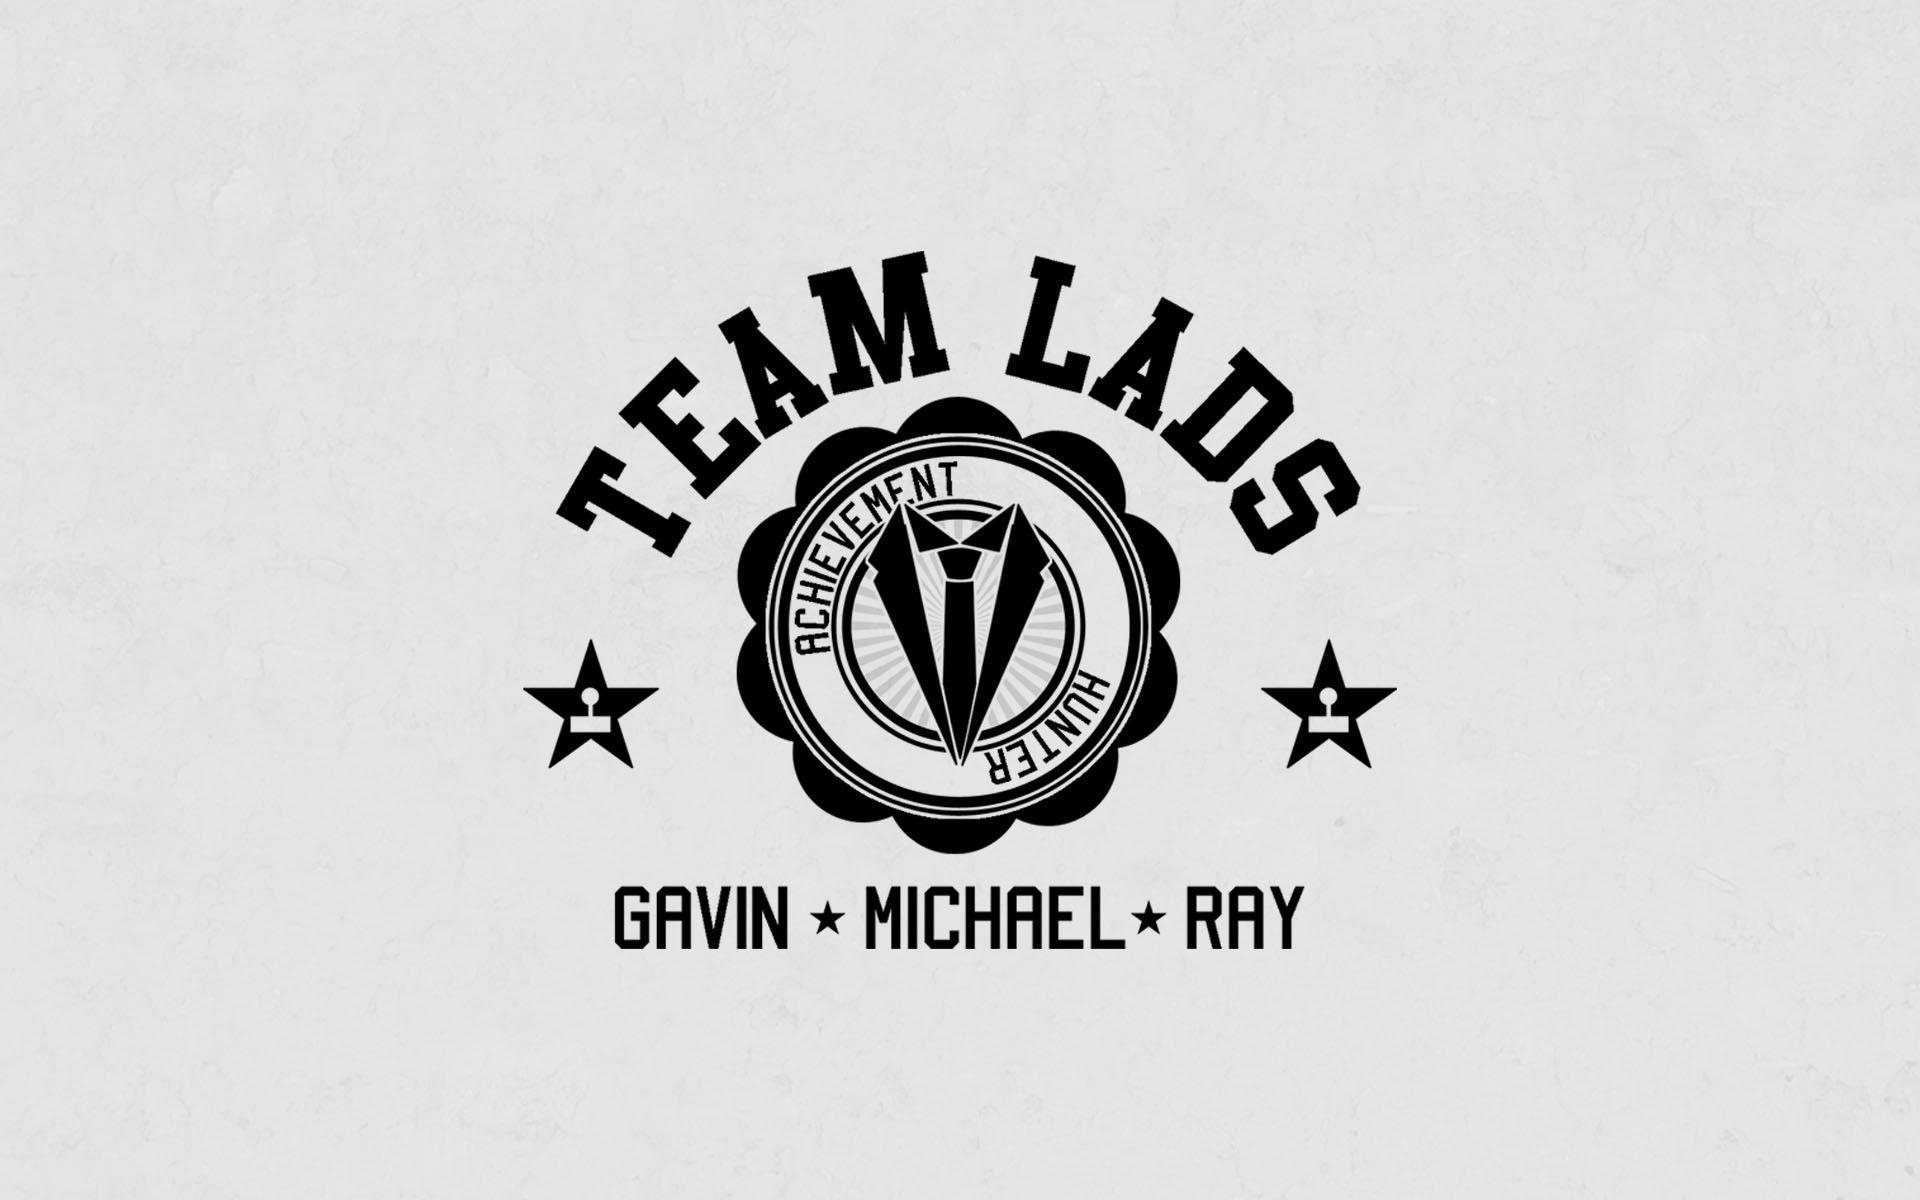 Team Lads Logo - Wallpaper : drawing, illustration, artwork, text, logo, brand